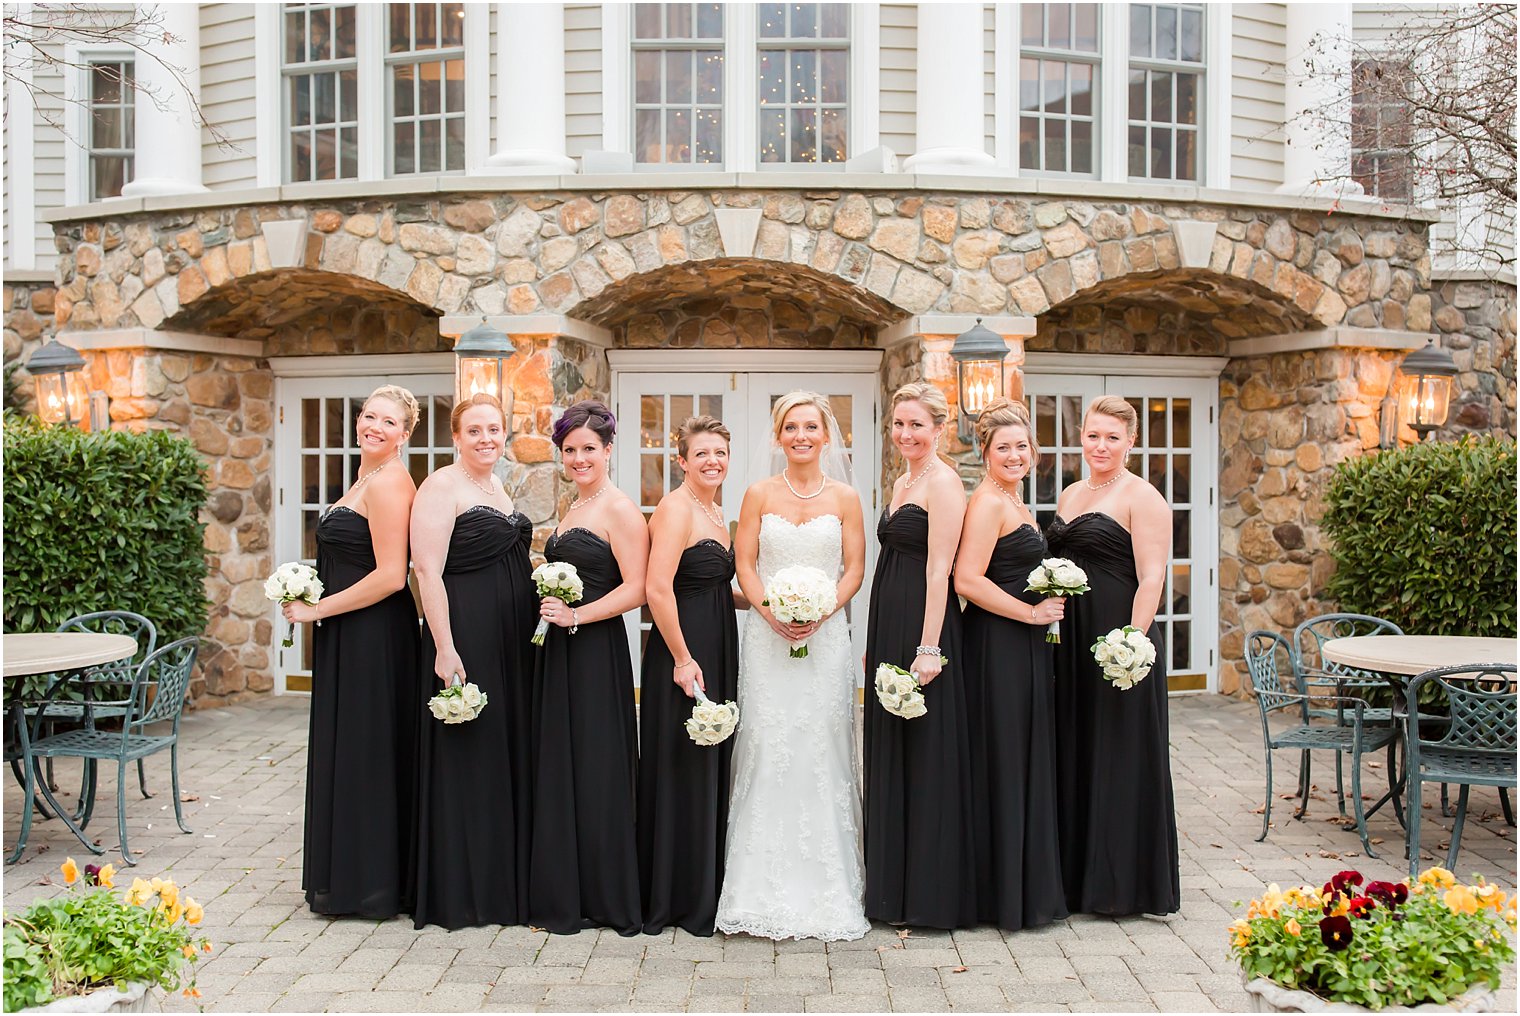 Black bridesmaids dresses